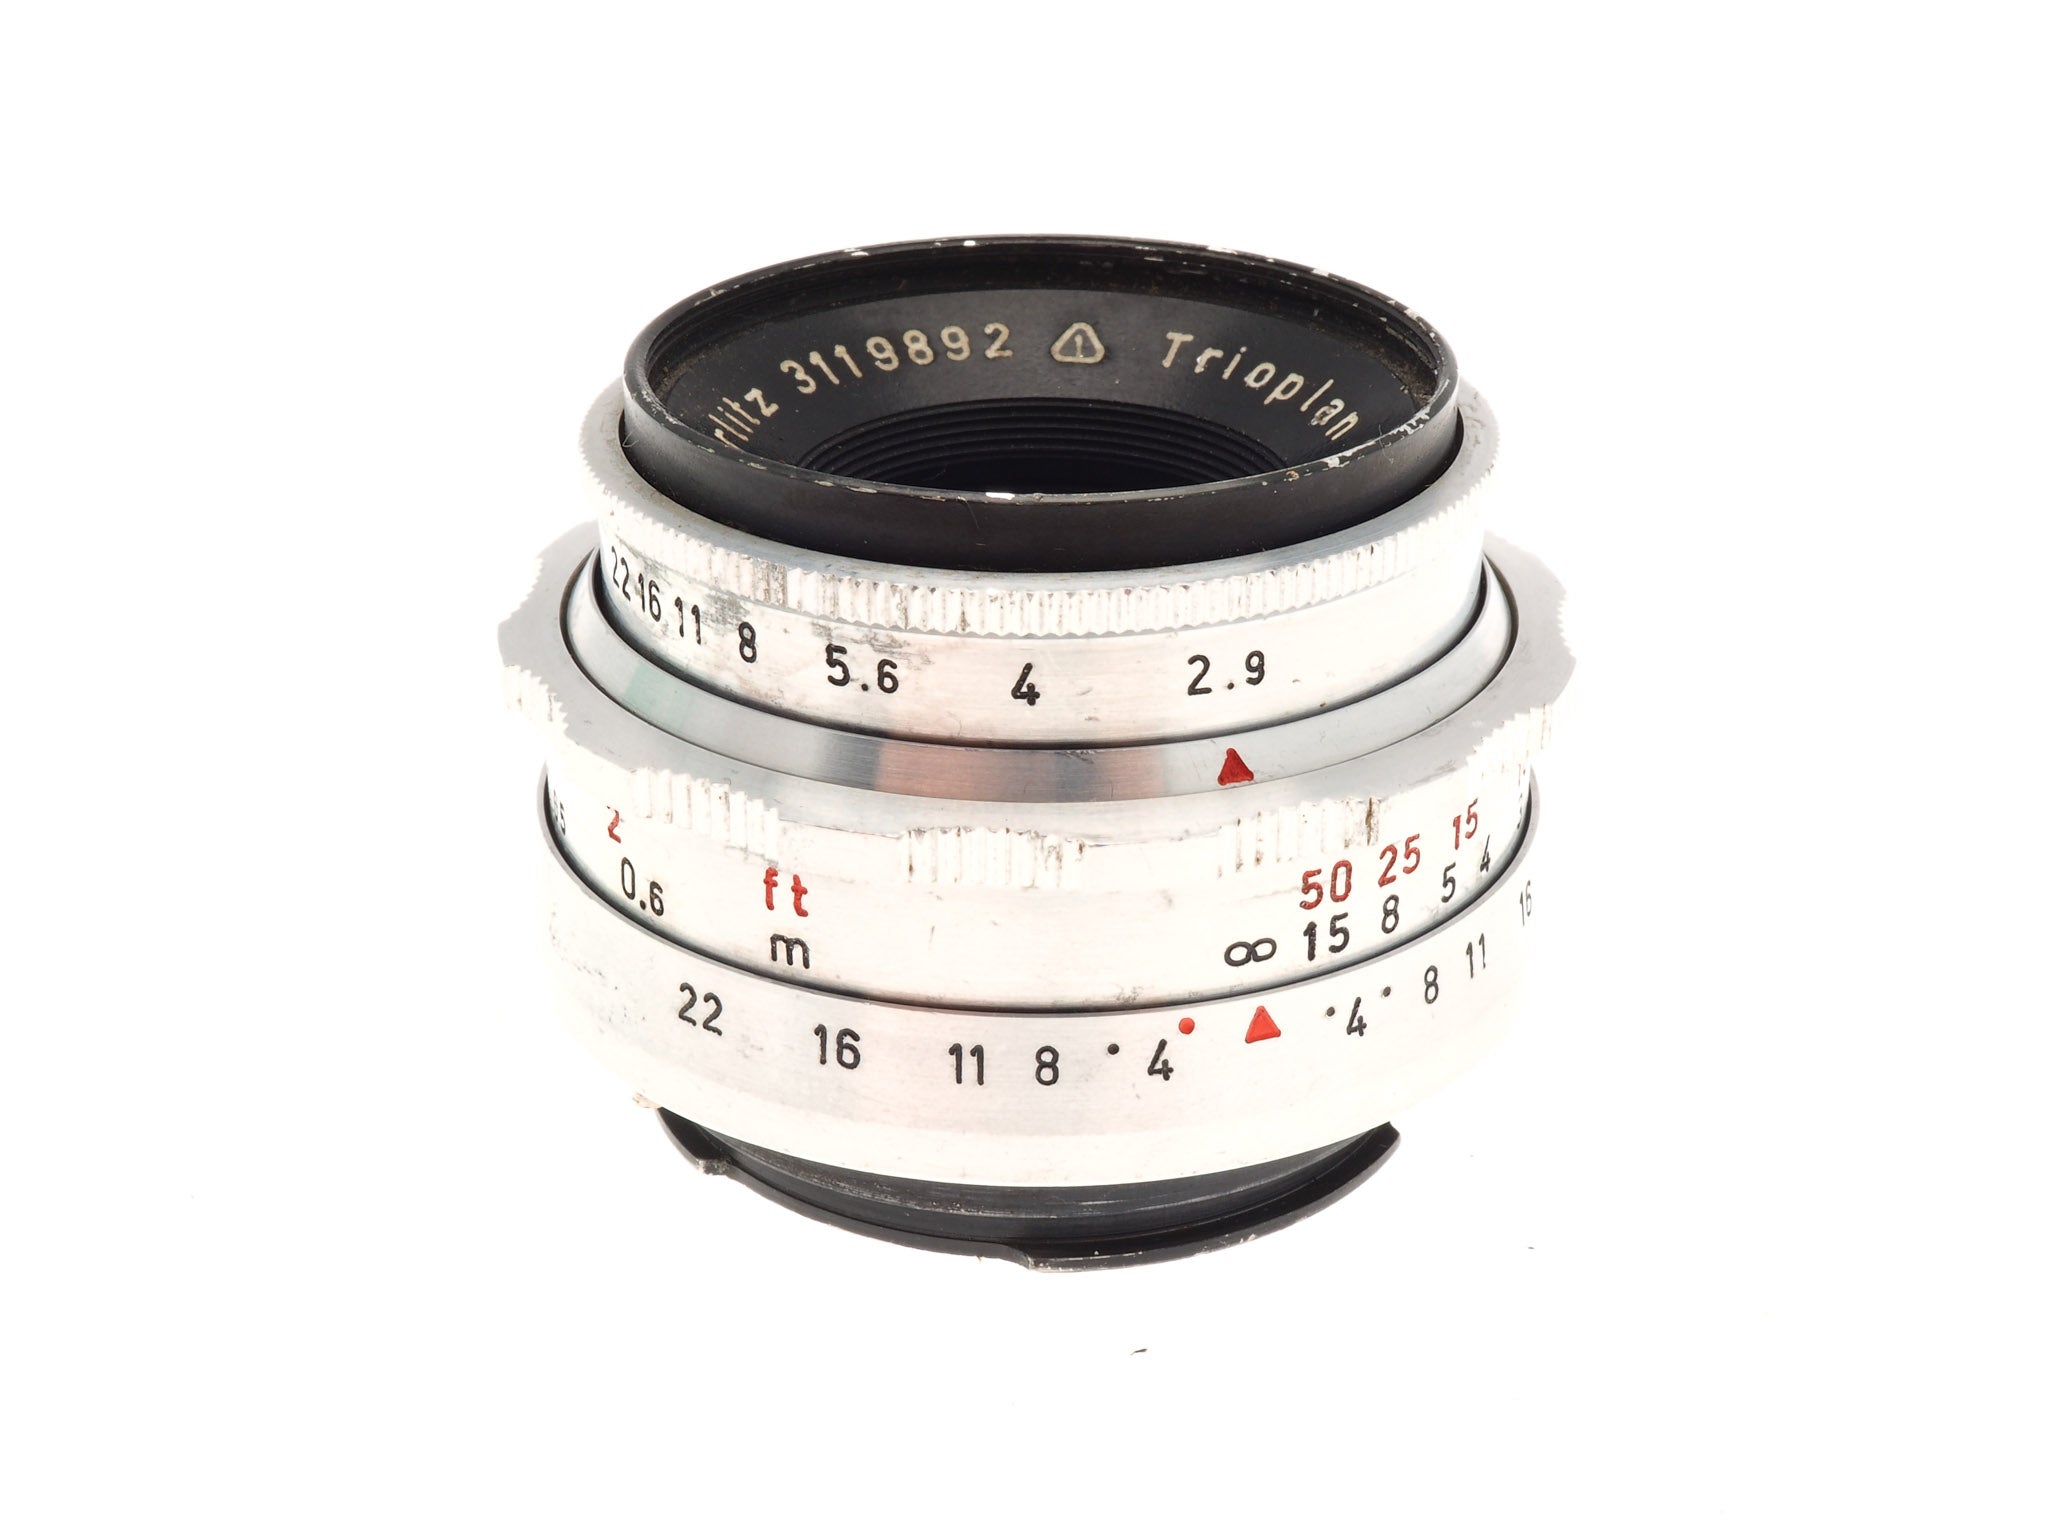 ◇Meyer-Optik Gorlitz◇ Trioplan 50mm F2.9 - レンズ(単焦点)